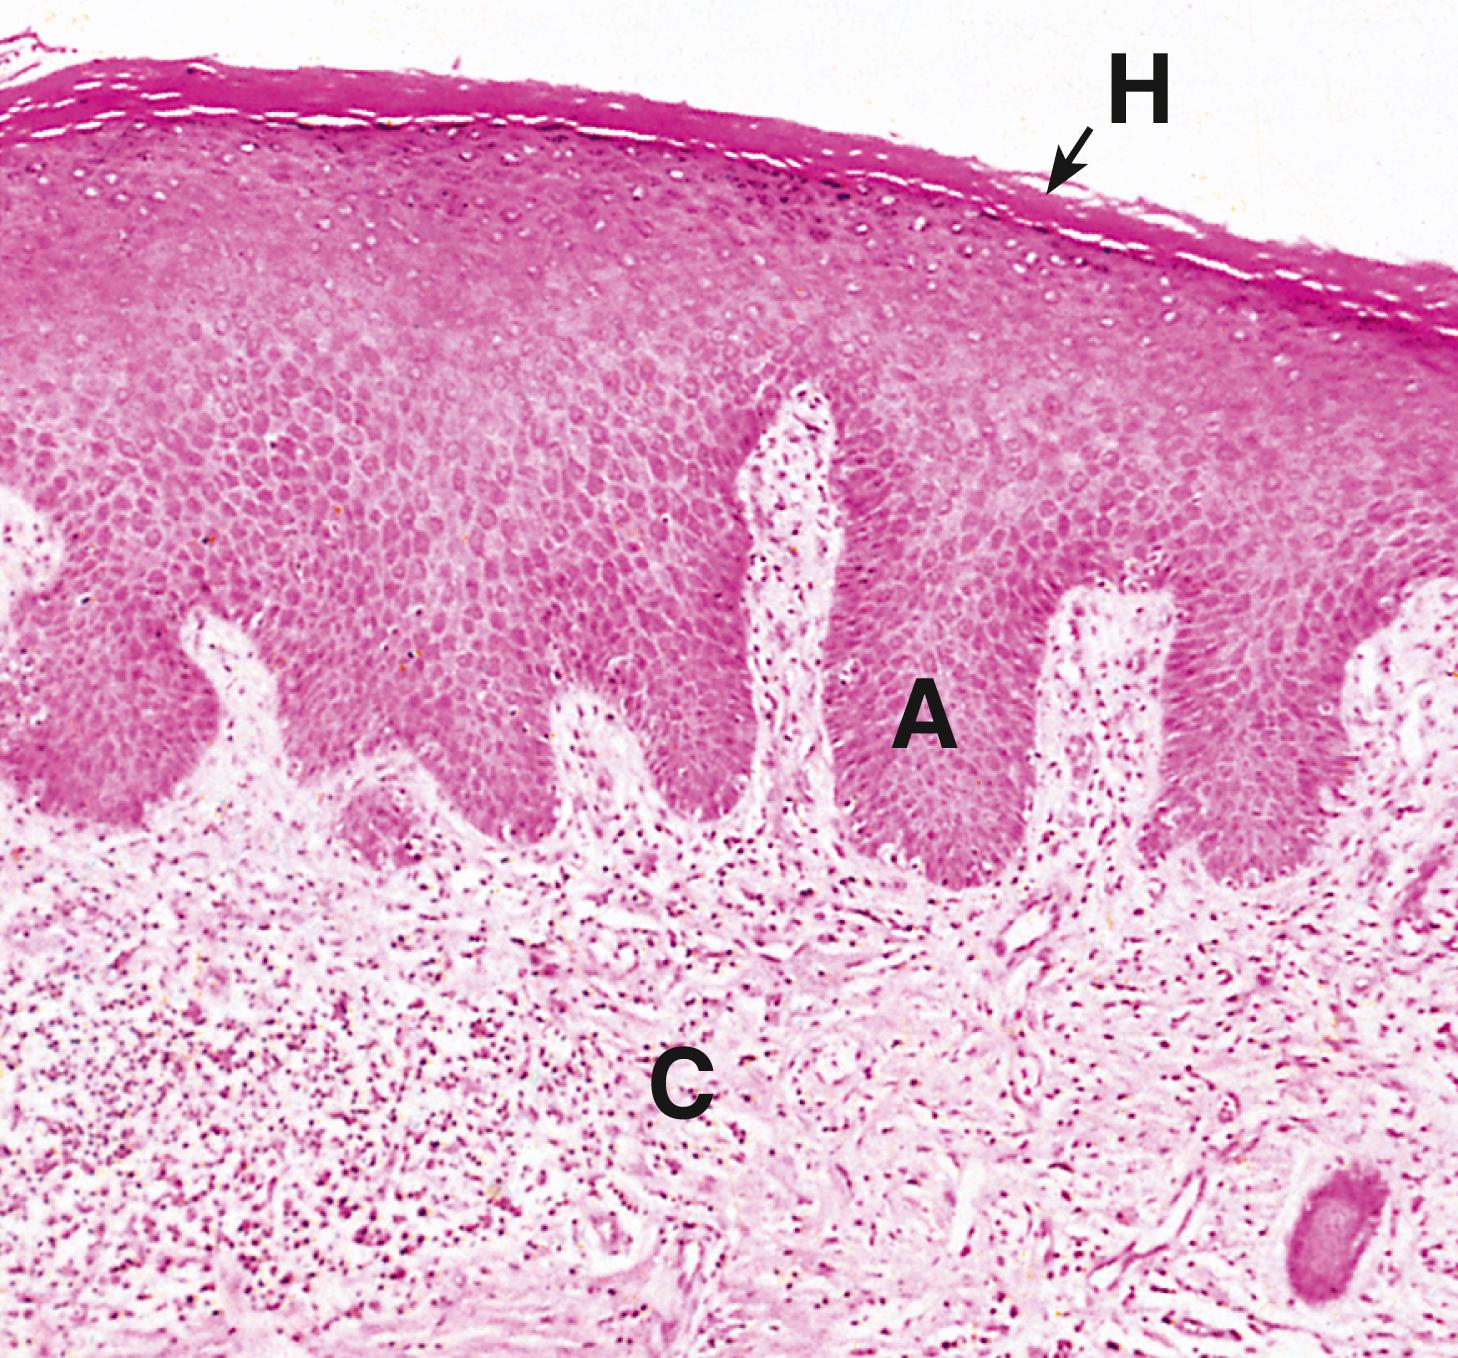 Fig. 21.6, Chronic dermatitis (MP).